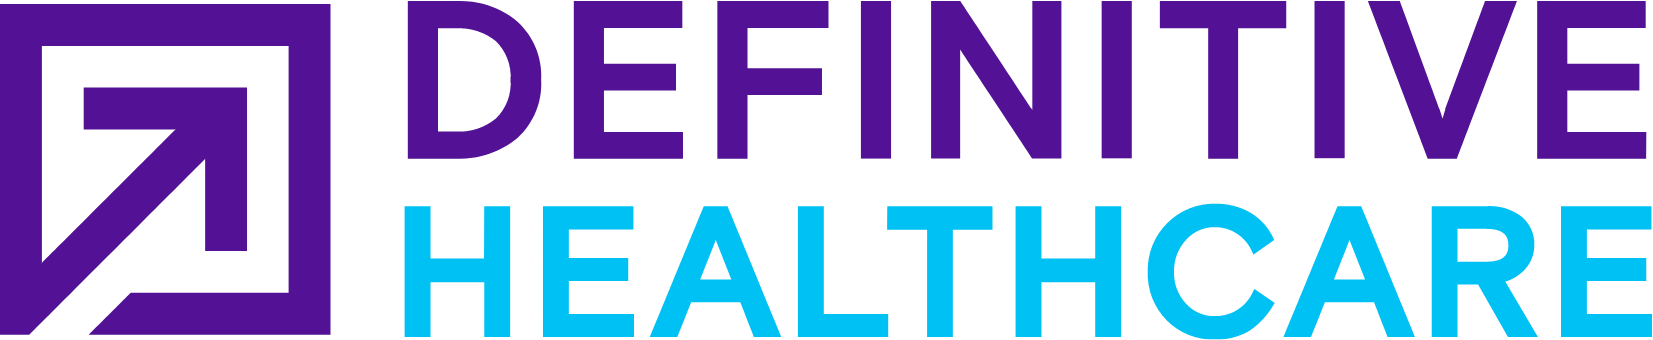 Definitive Healthcare logo large (transparent PNG)